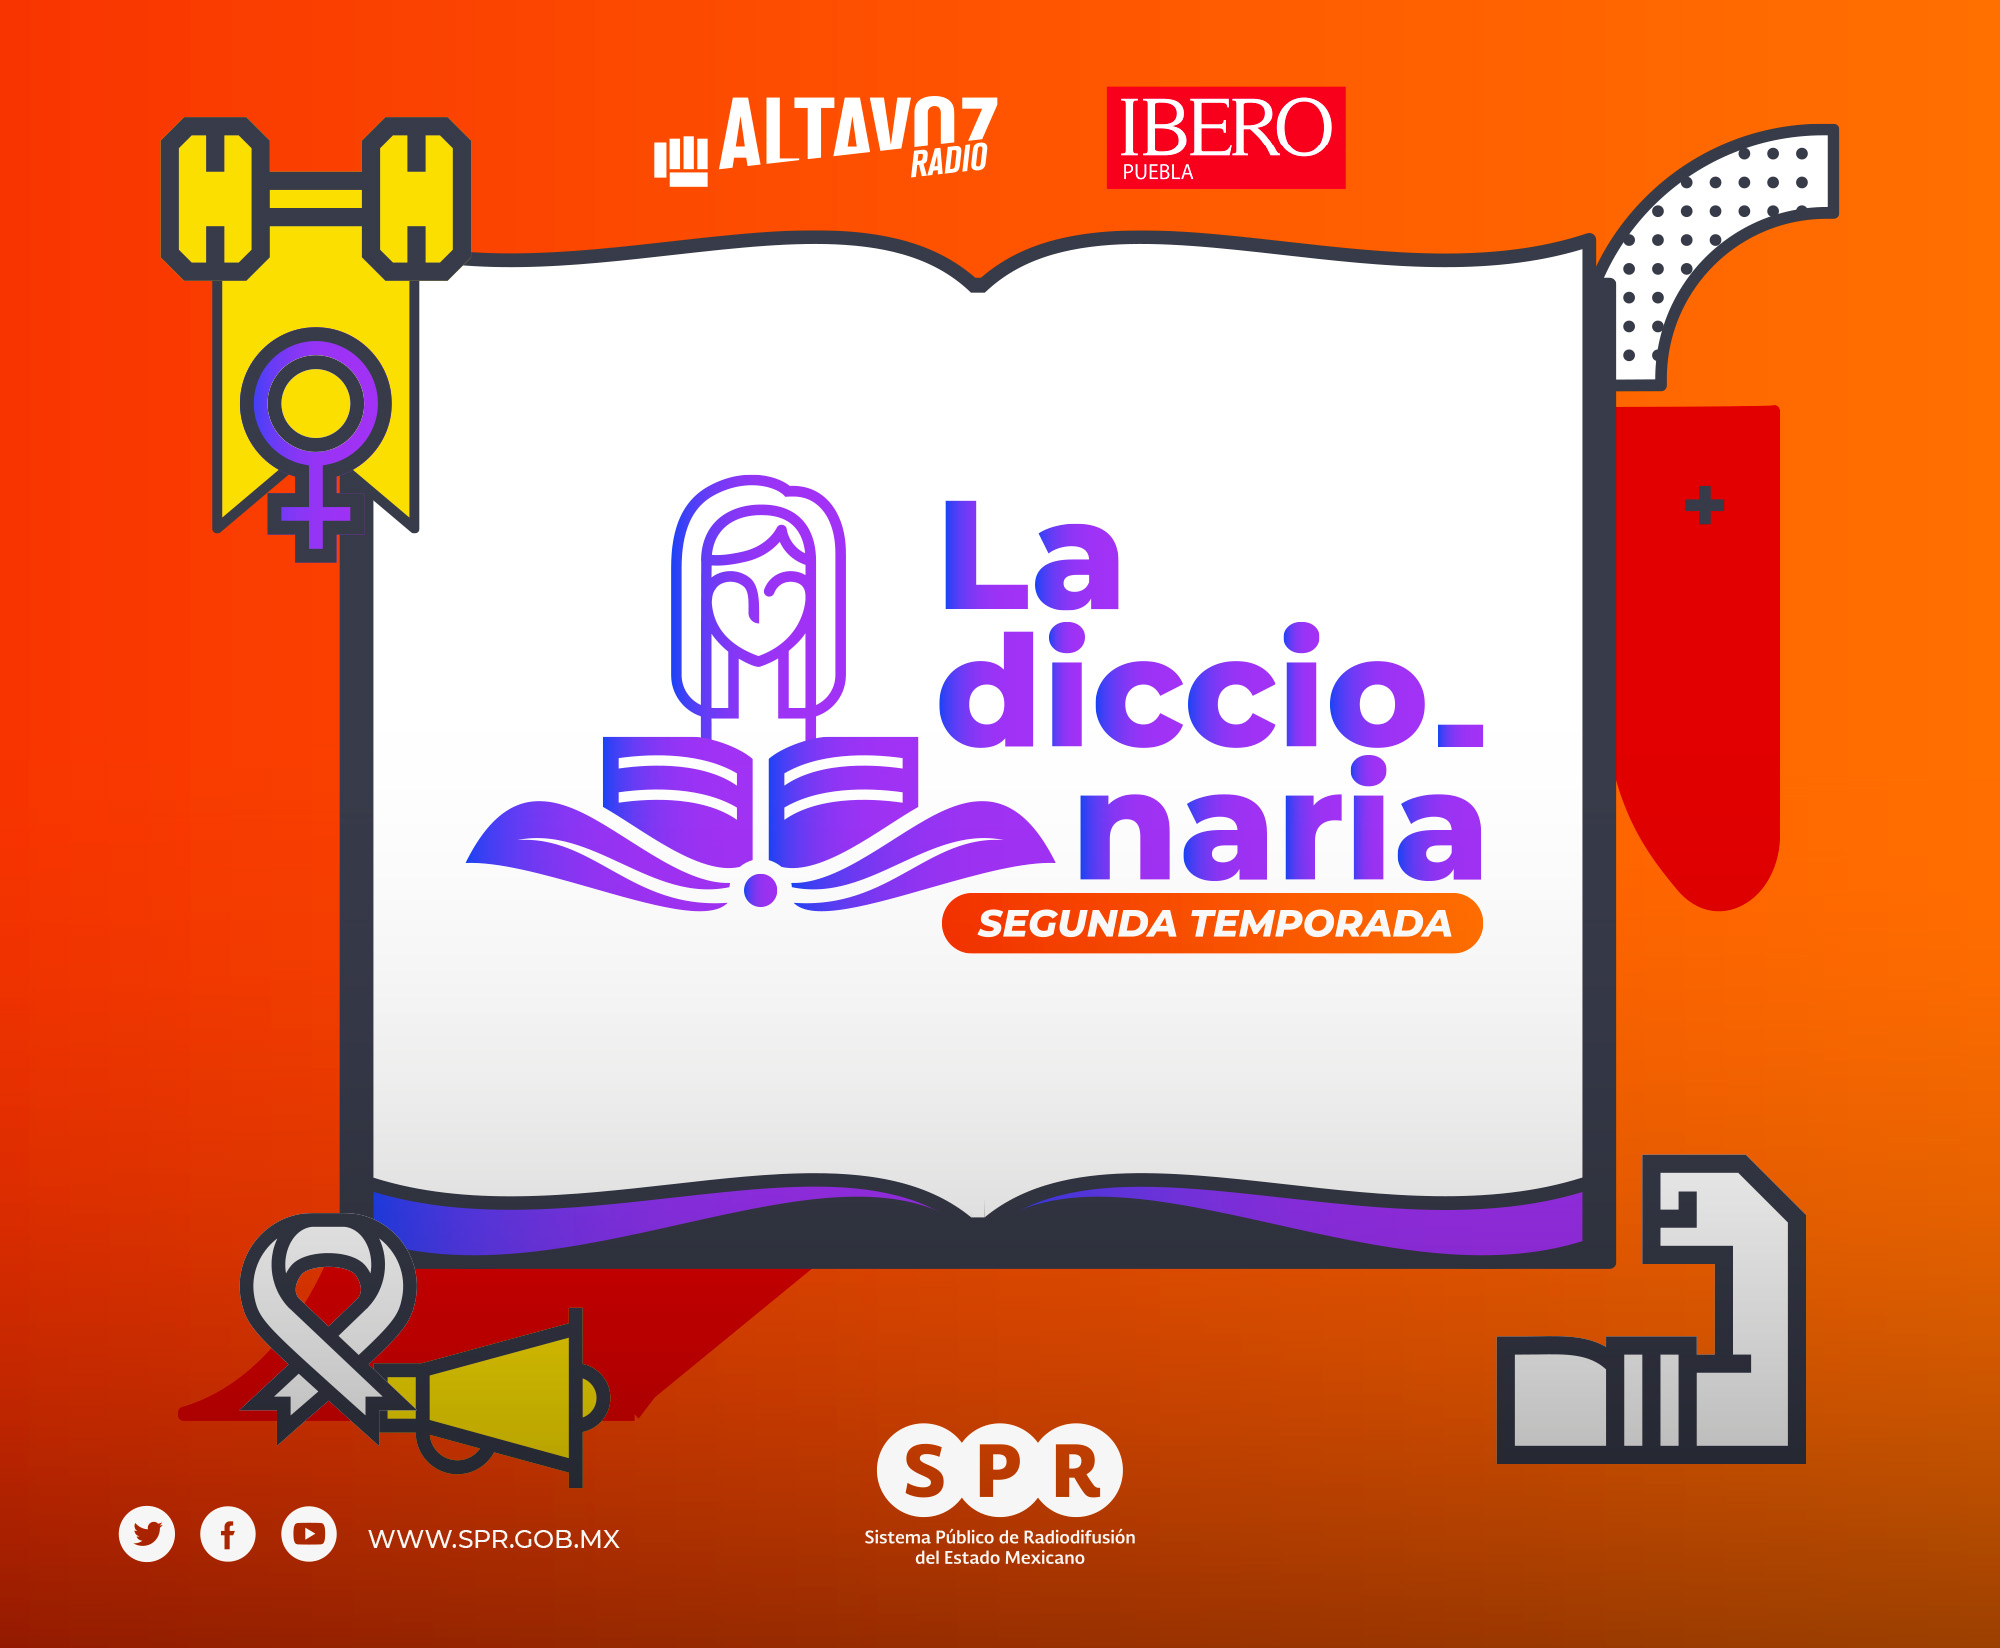 Altavoz Radio e IBERO Radio Puebla presentan la segunda temporada de La Diccionaria